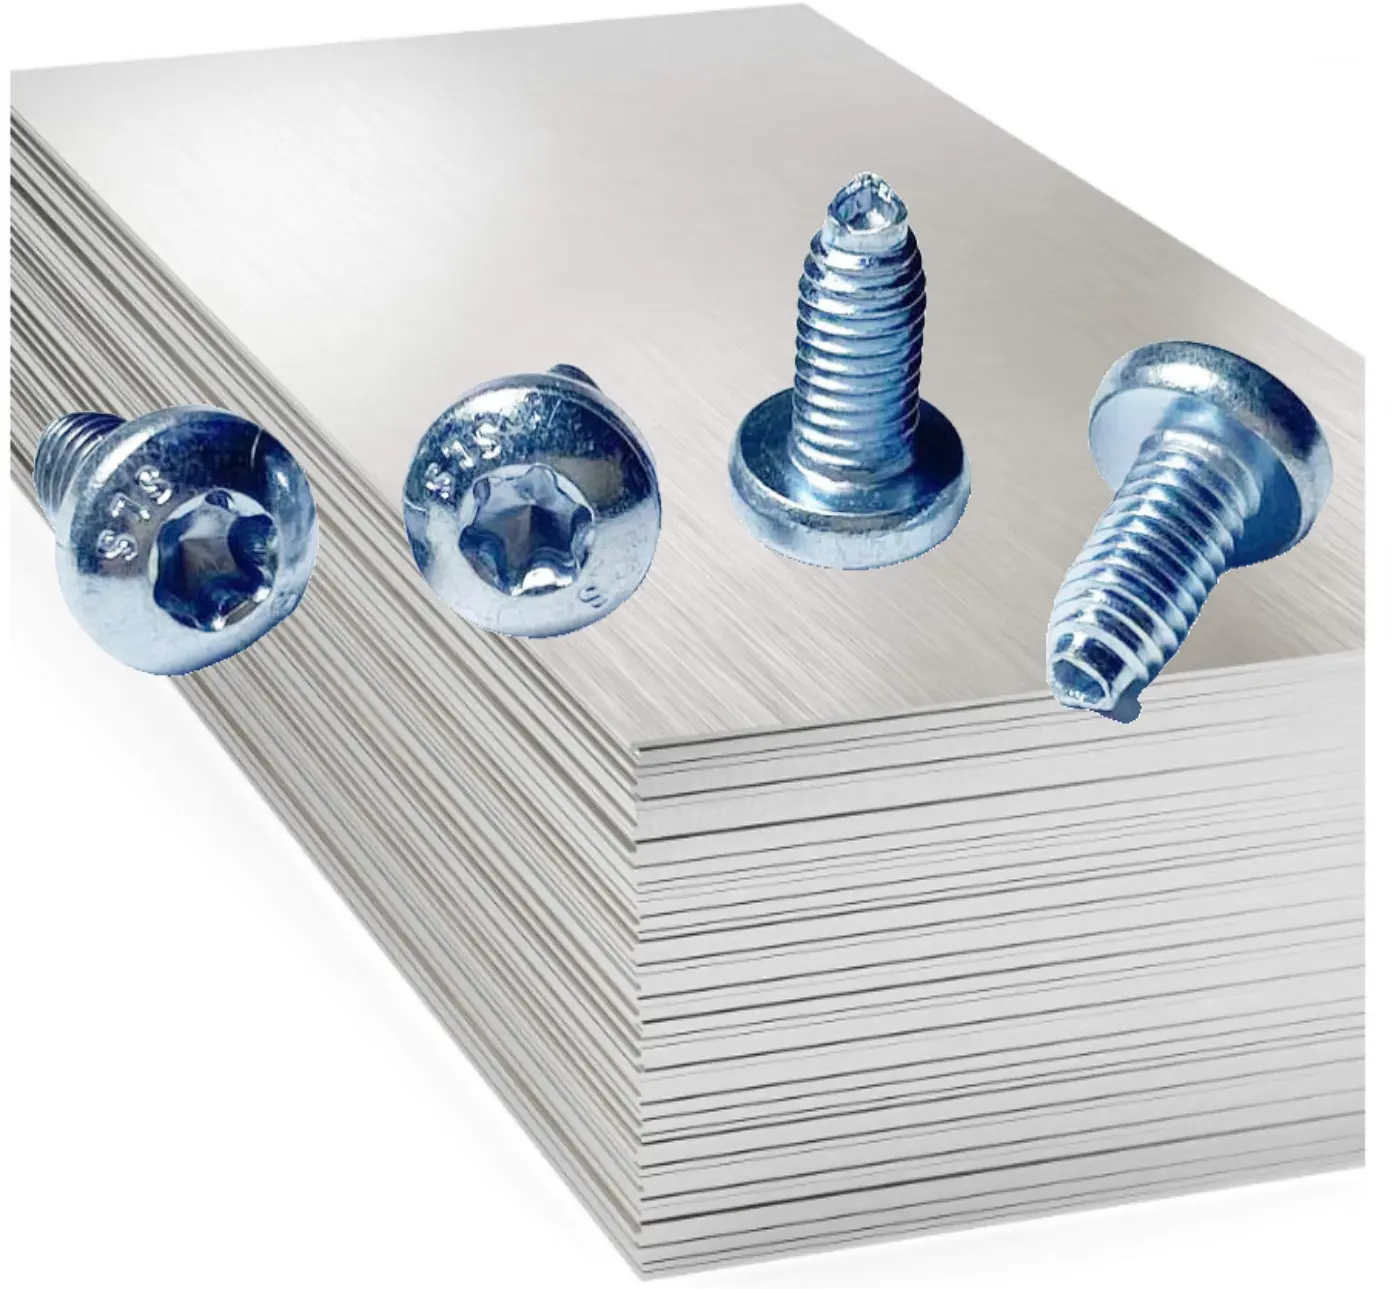 2-56 × 1/2 Pan Head Torx Thread Forming  Screws for Metal  Steel Blue Zinc Plated